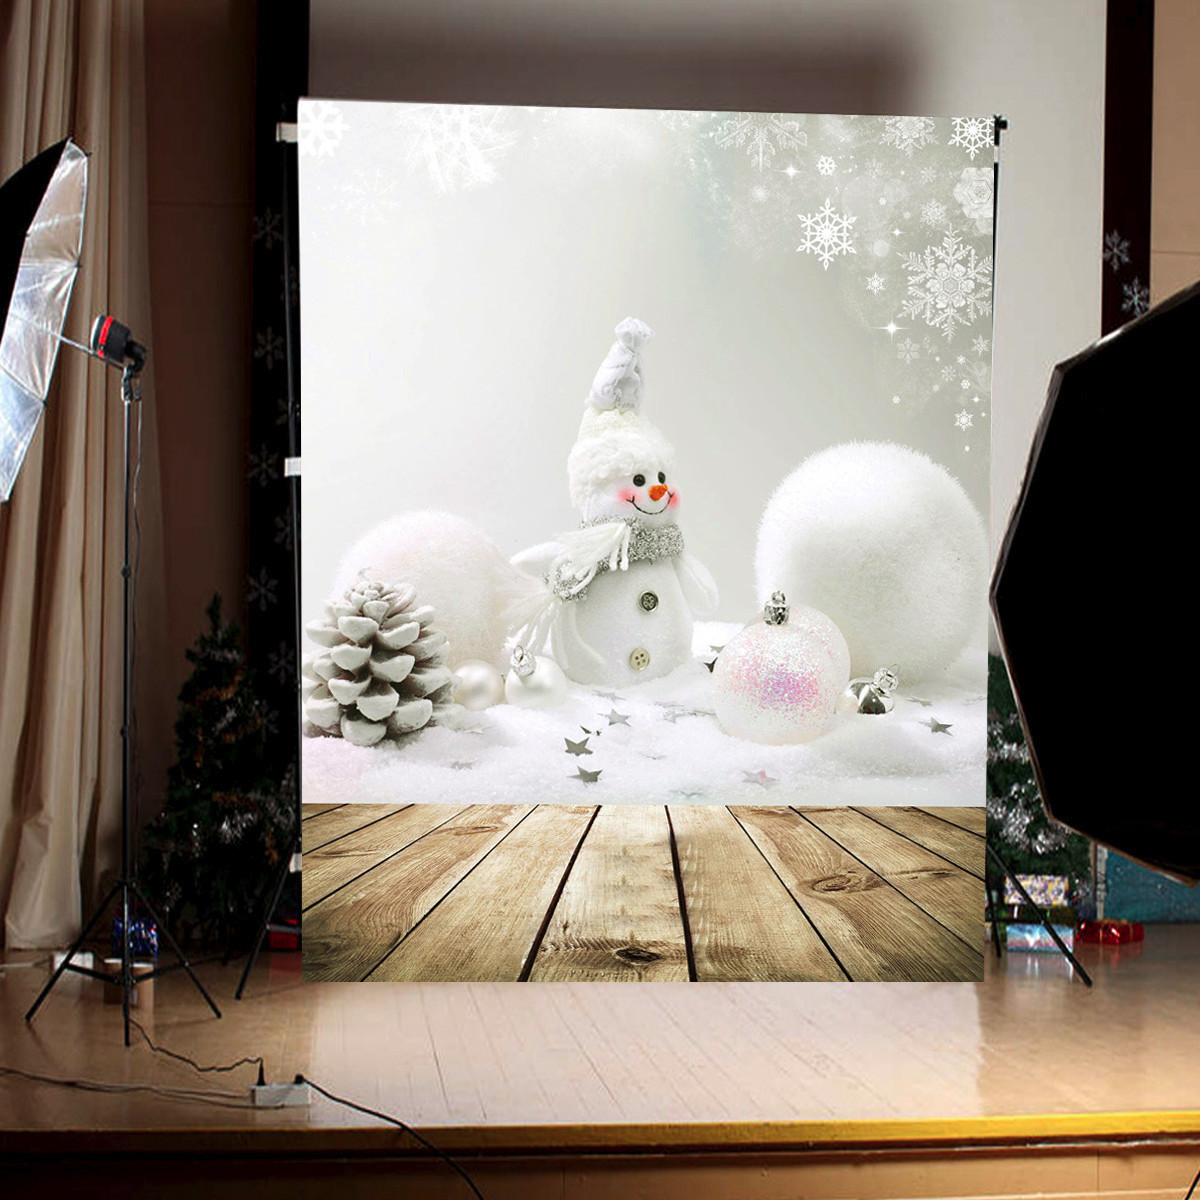 5x7ft Christmas Snowman Wall Board Studio Photo Photography Background Backdrop